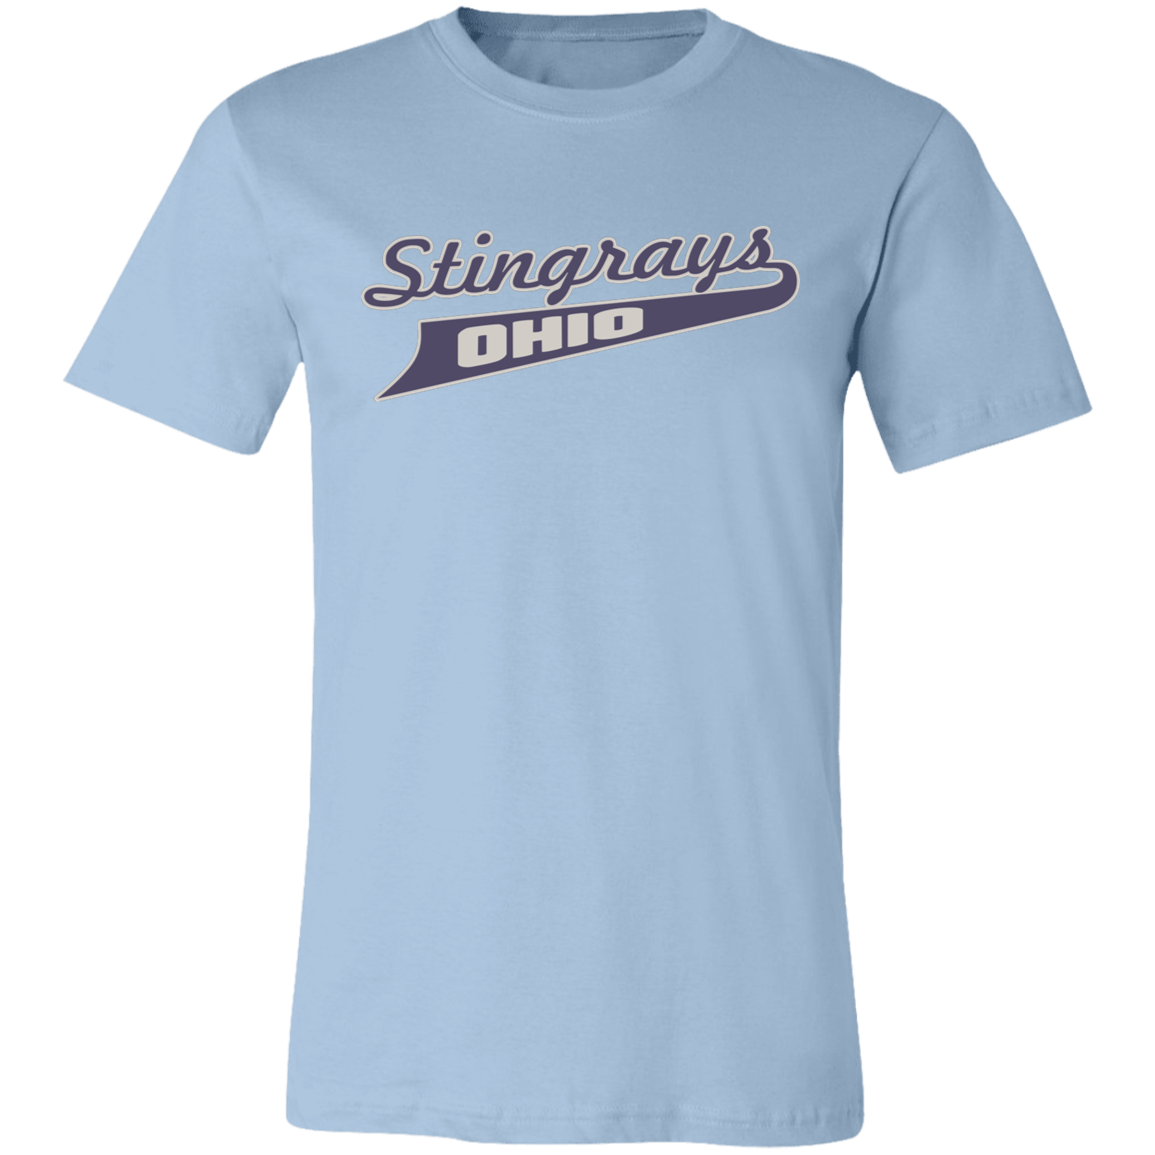 Ohio Stingrays Premium Cotton T-Shirt